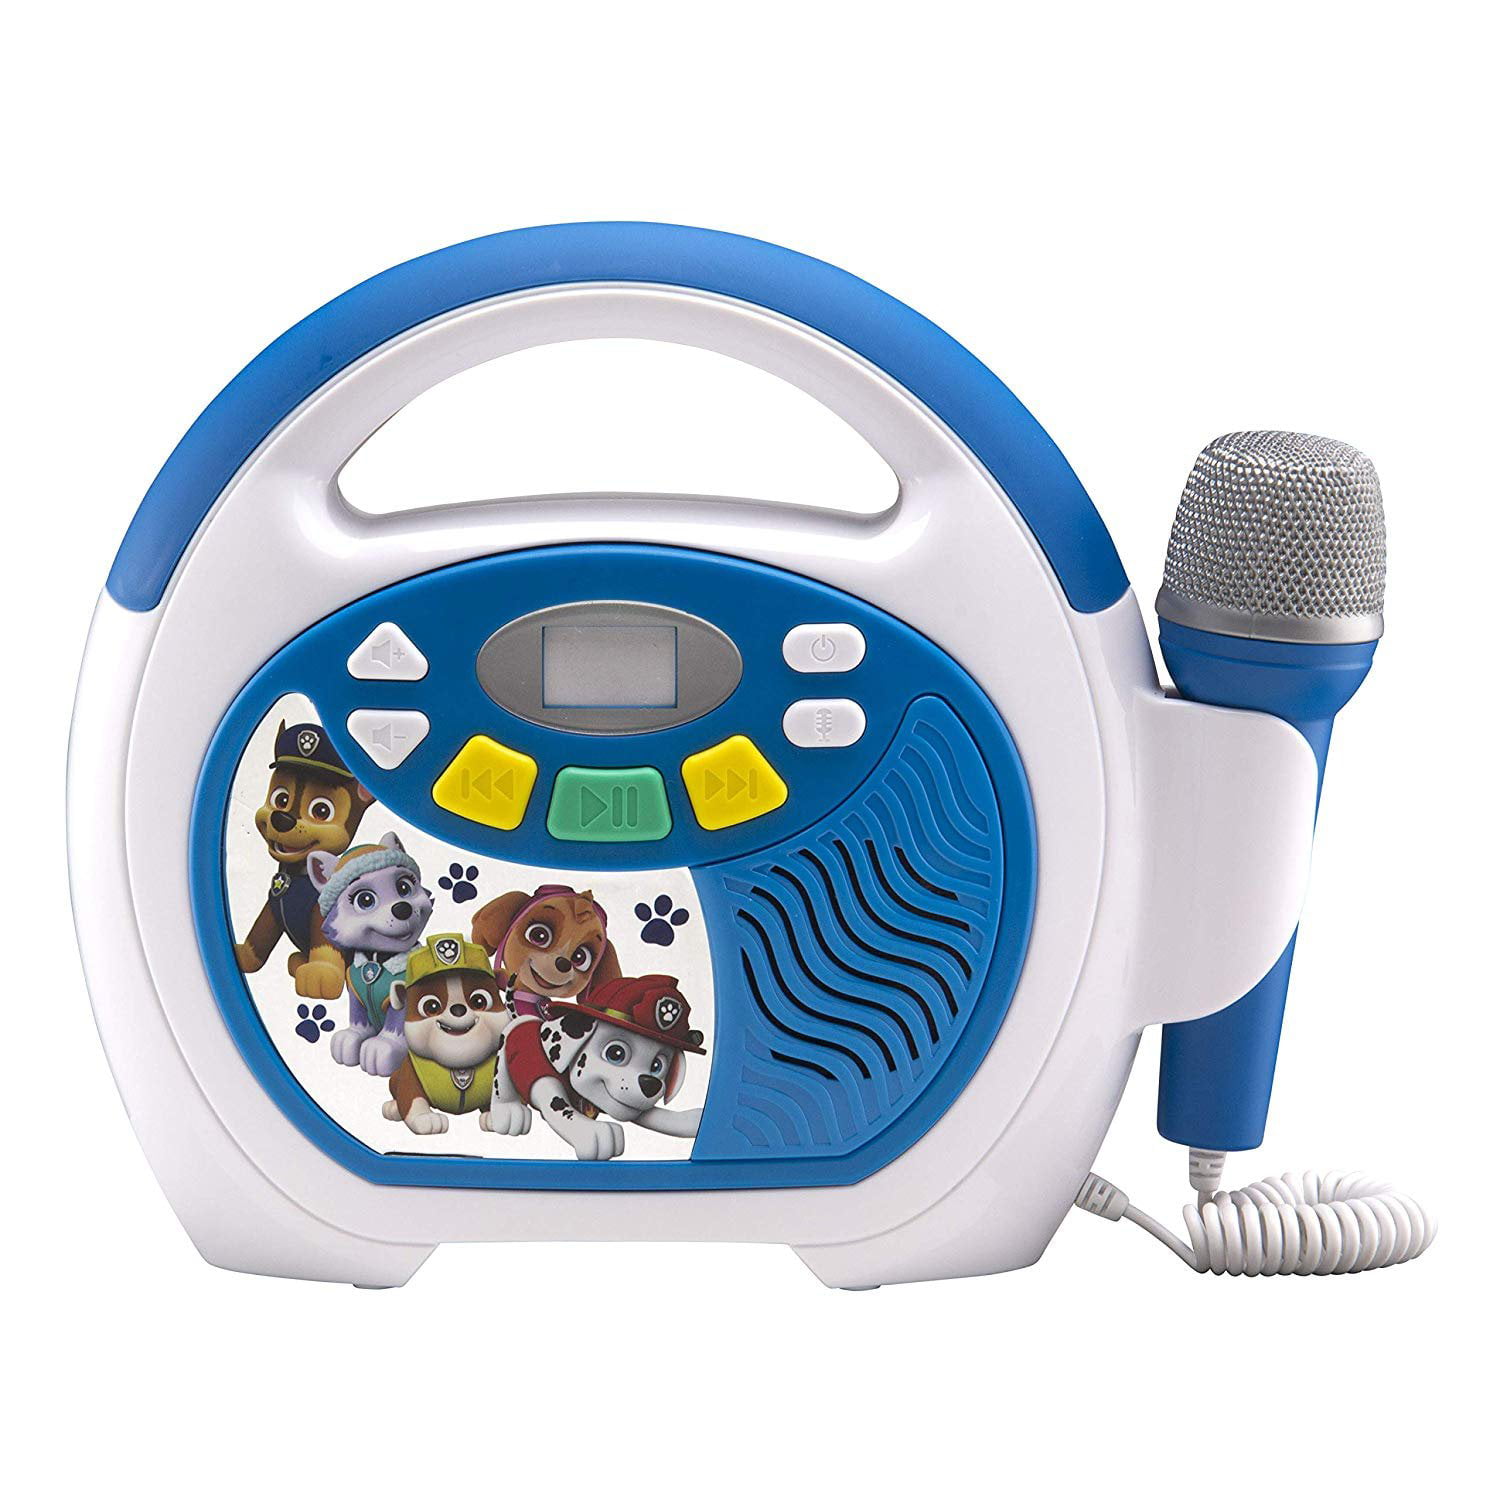 Electronics For Kids Music Players Karaoke Jojo Siwa Sing Along Mp3 Microphone With Built In